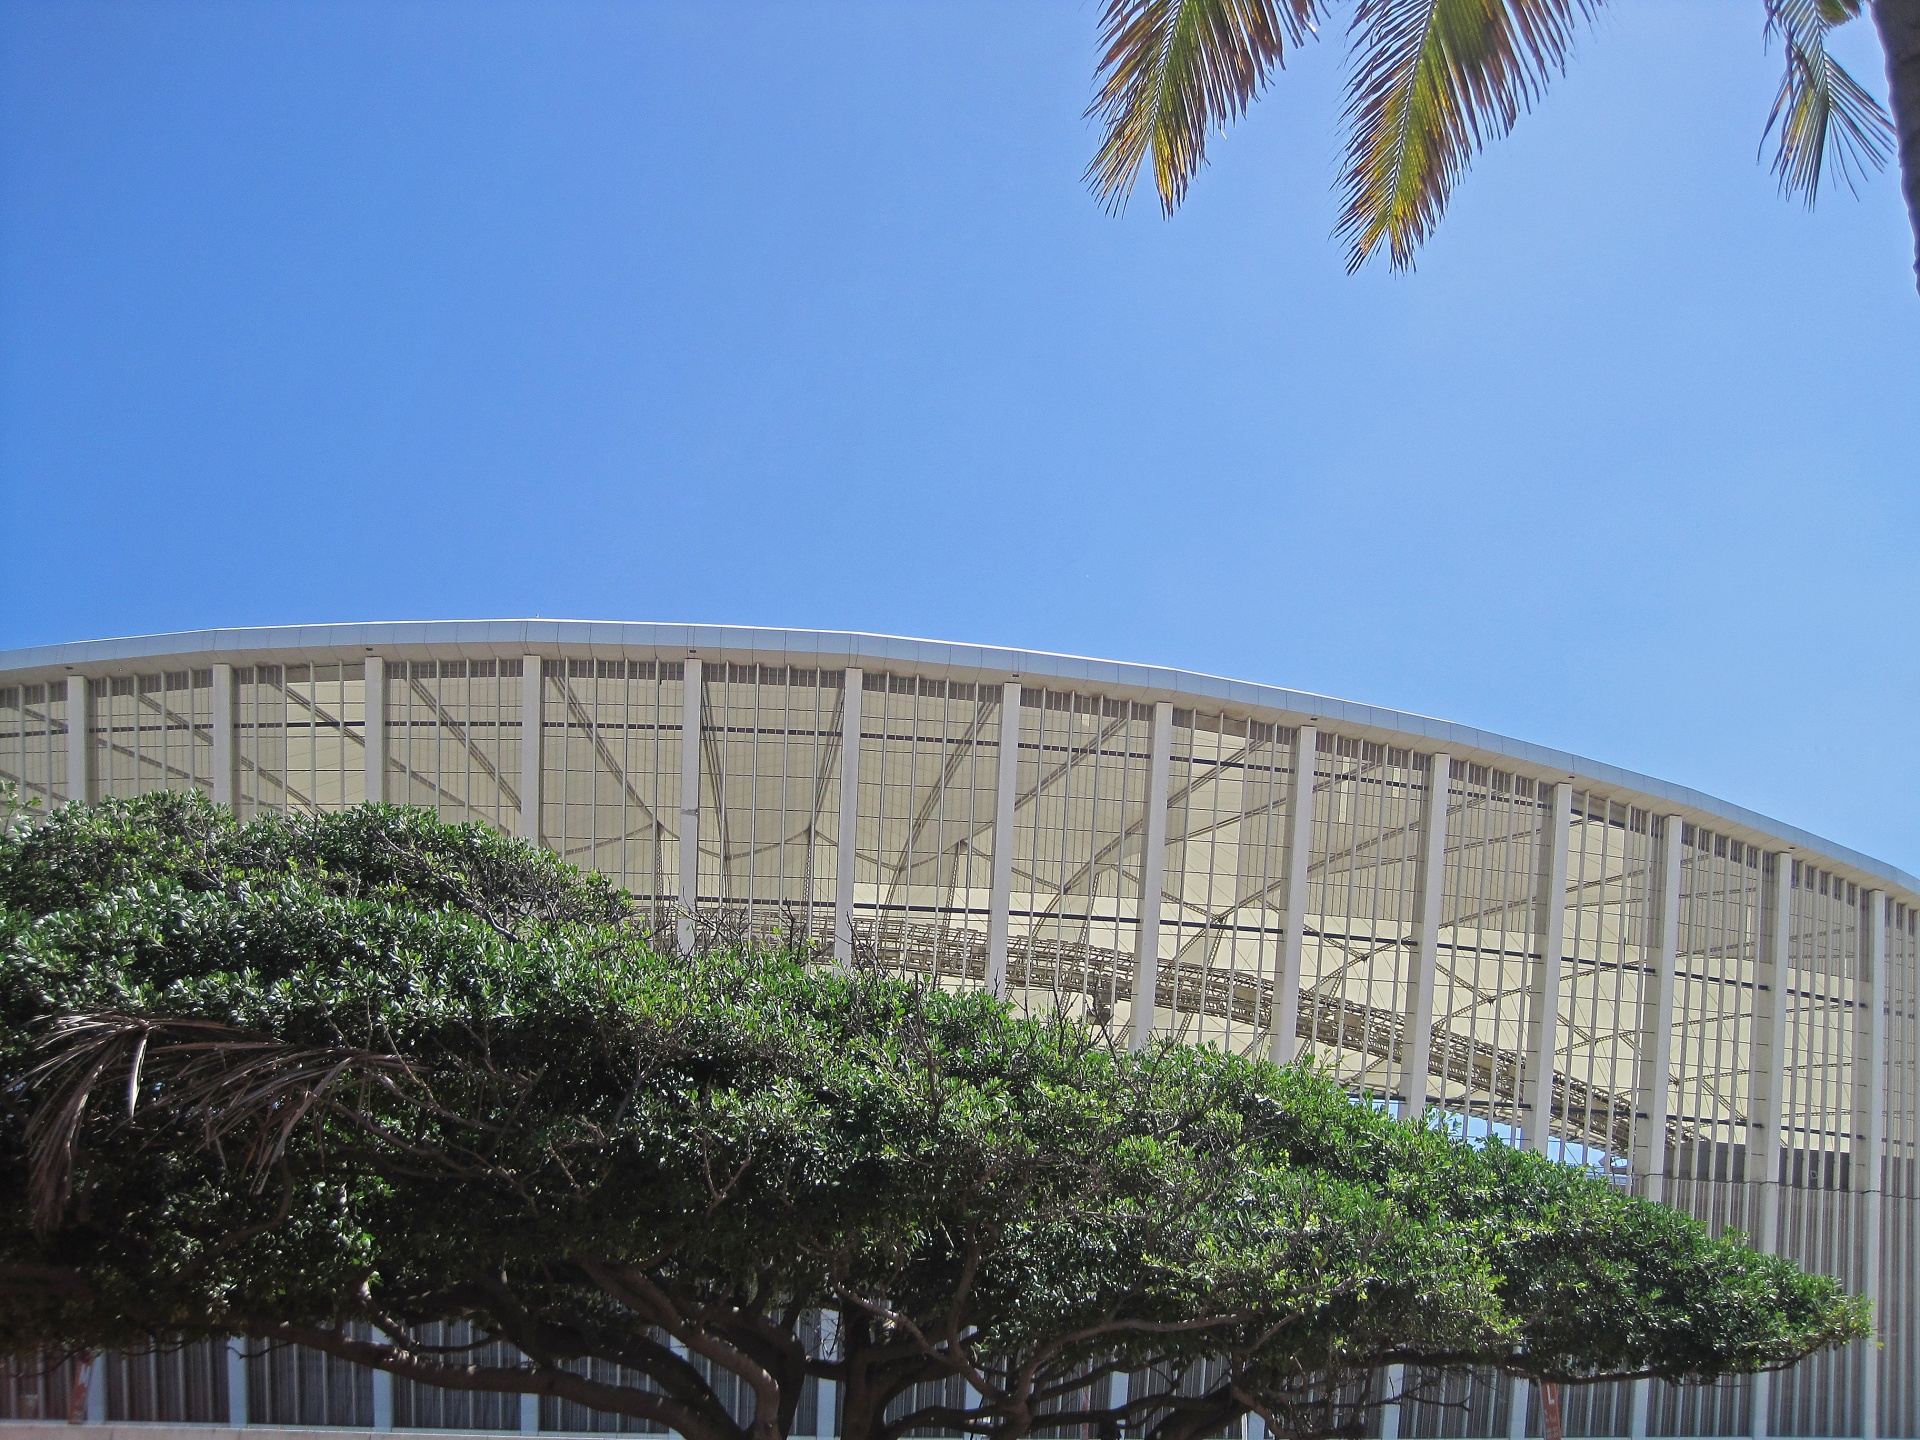 Medžiai,  Stadionas,  Struktūra,  Balta,  Architektūra,  Mozės & Nbsp,  Mabhida,  Sportas,  Arena,  Durban